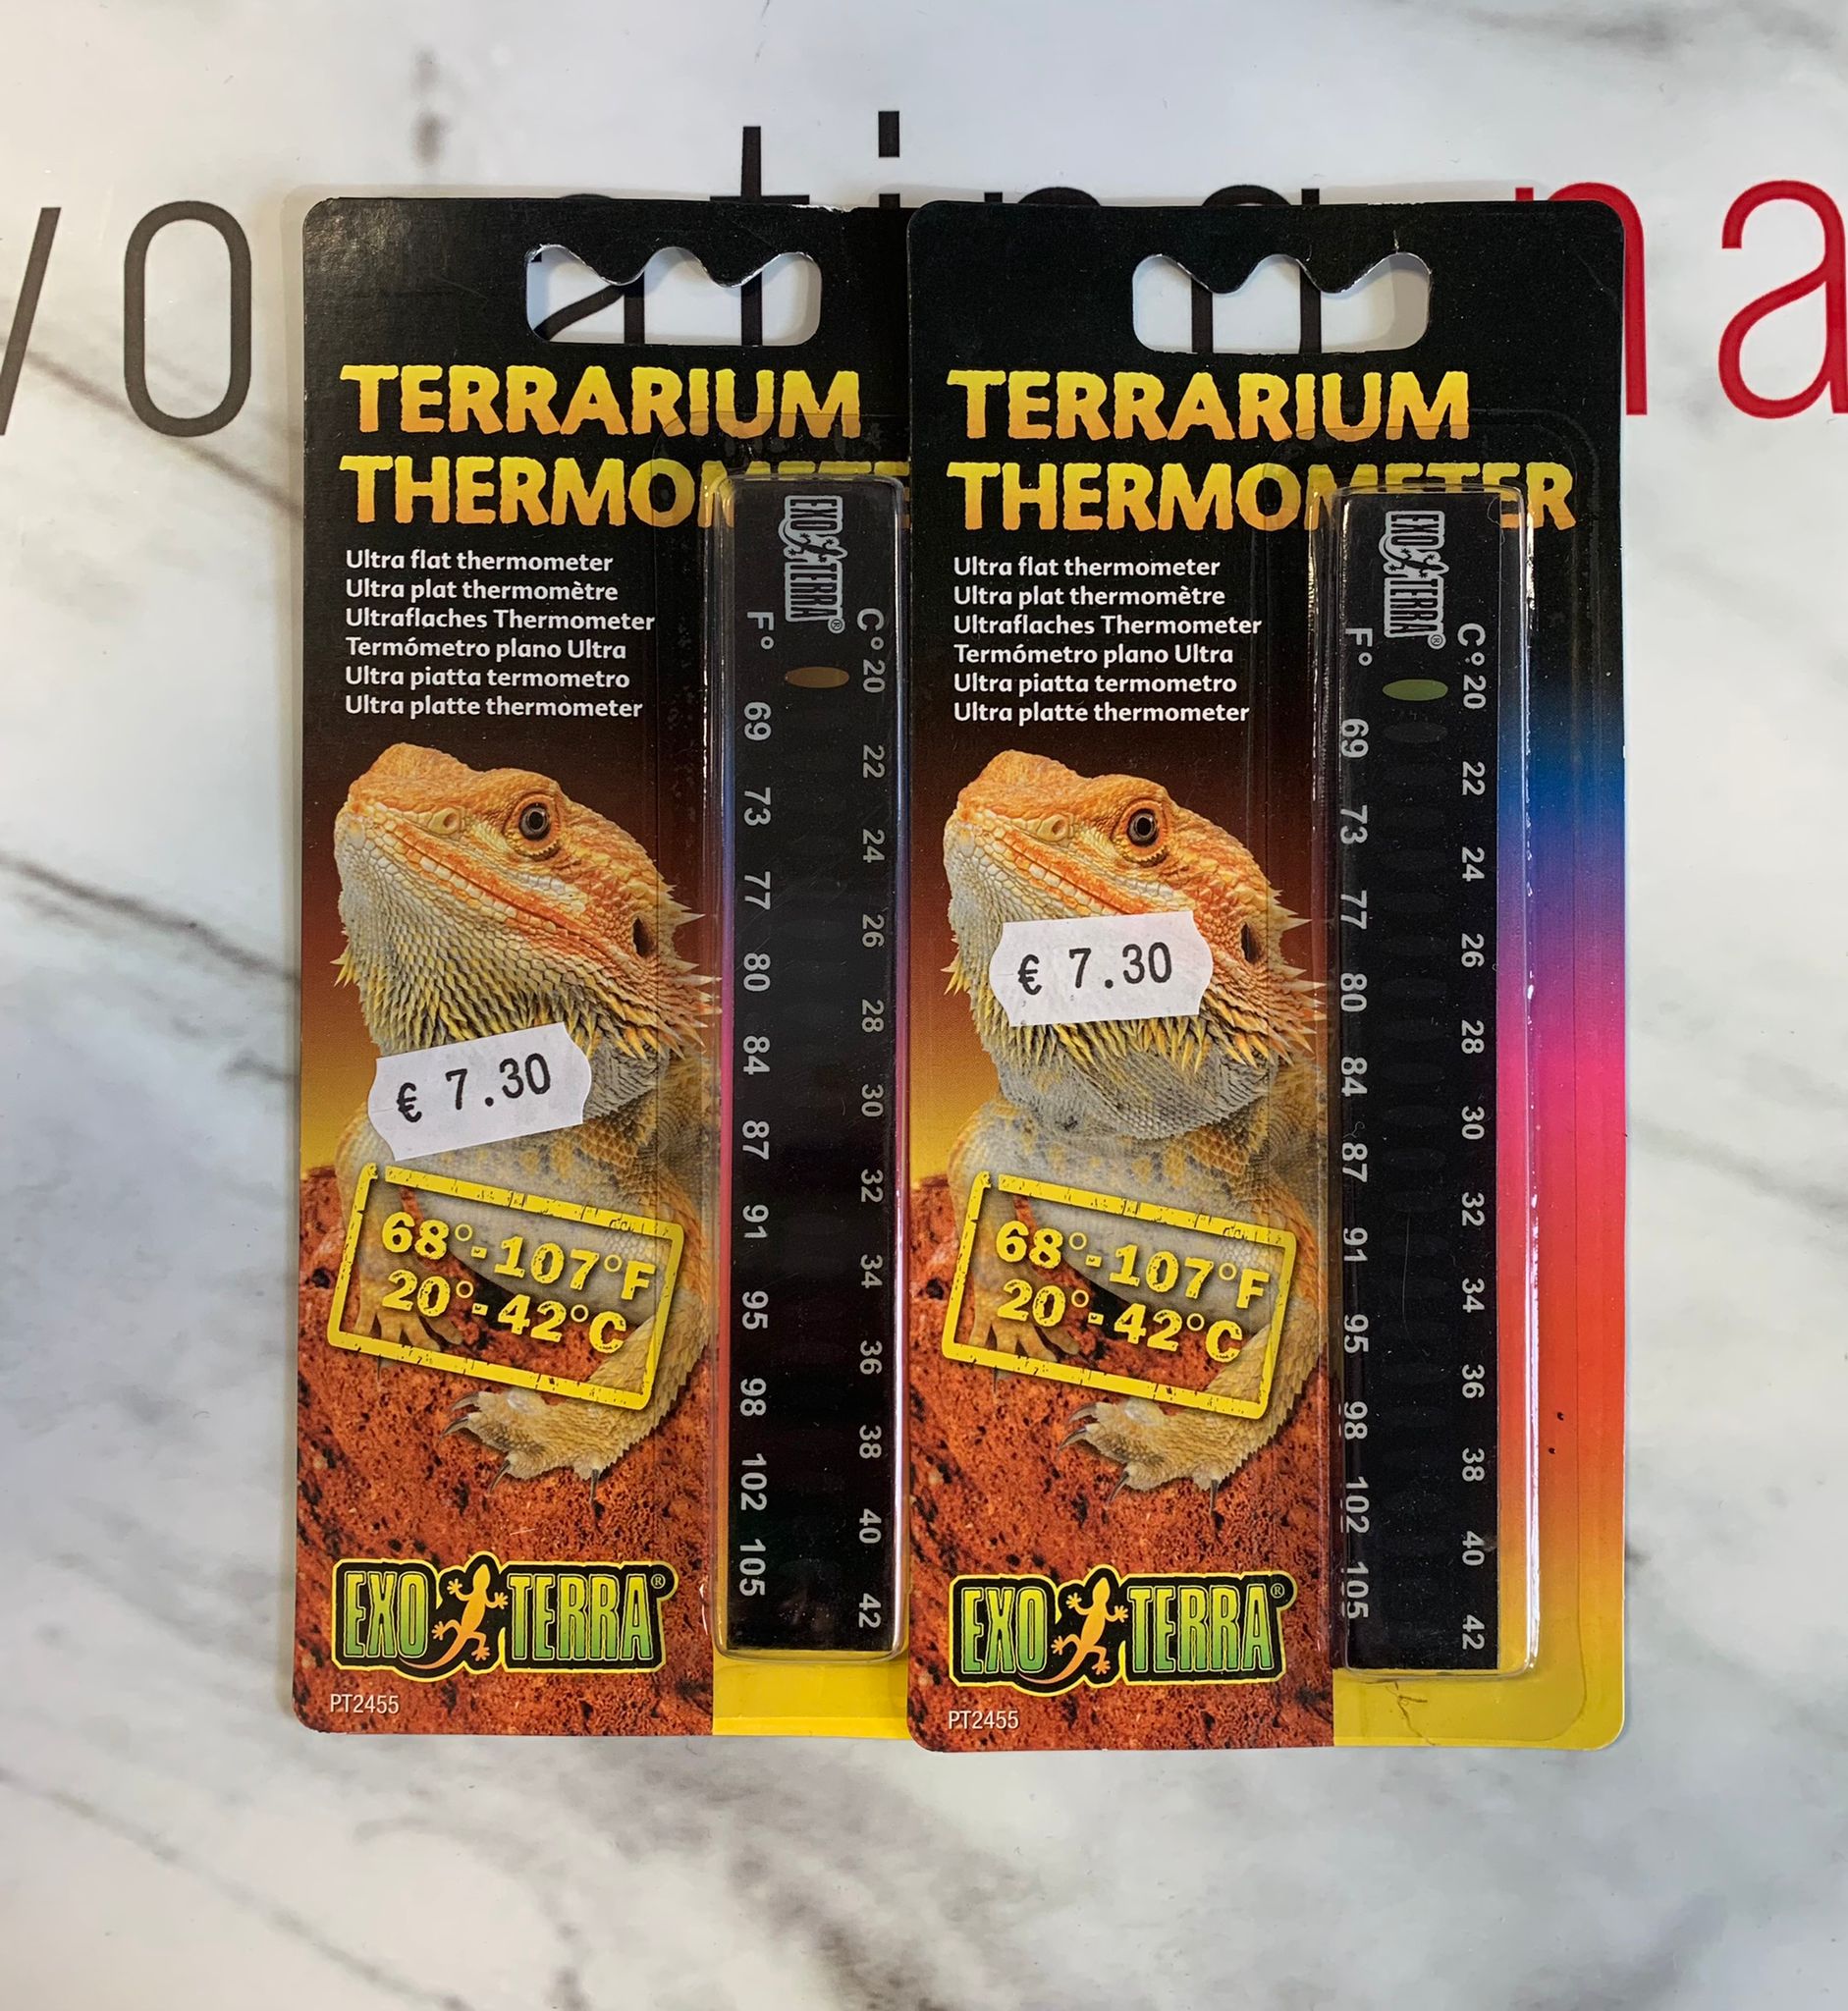 Exo Terra Terrarium Ultra Flat Thermometer, Pet Shop